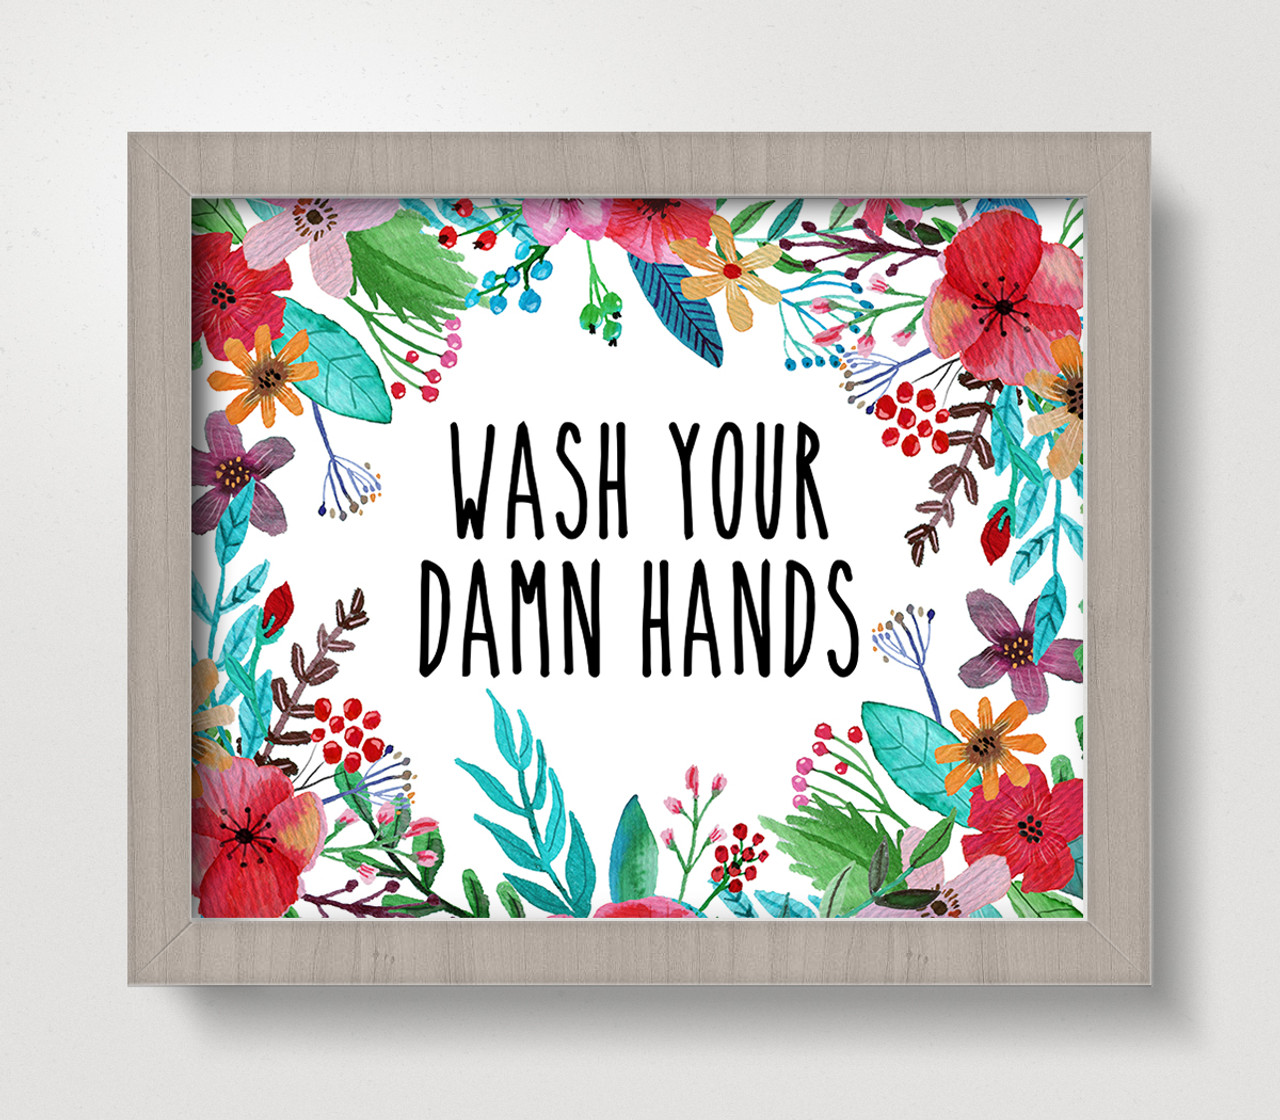 Wash Your Damn Hands 8 x 10 Art Print - Wall Decor Home Bathroom Floral Flowers
